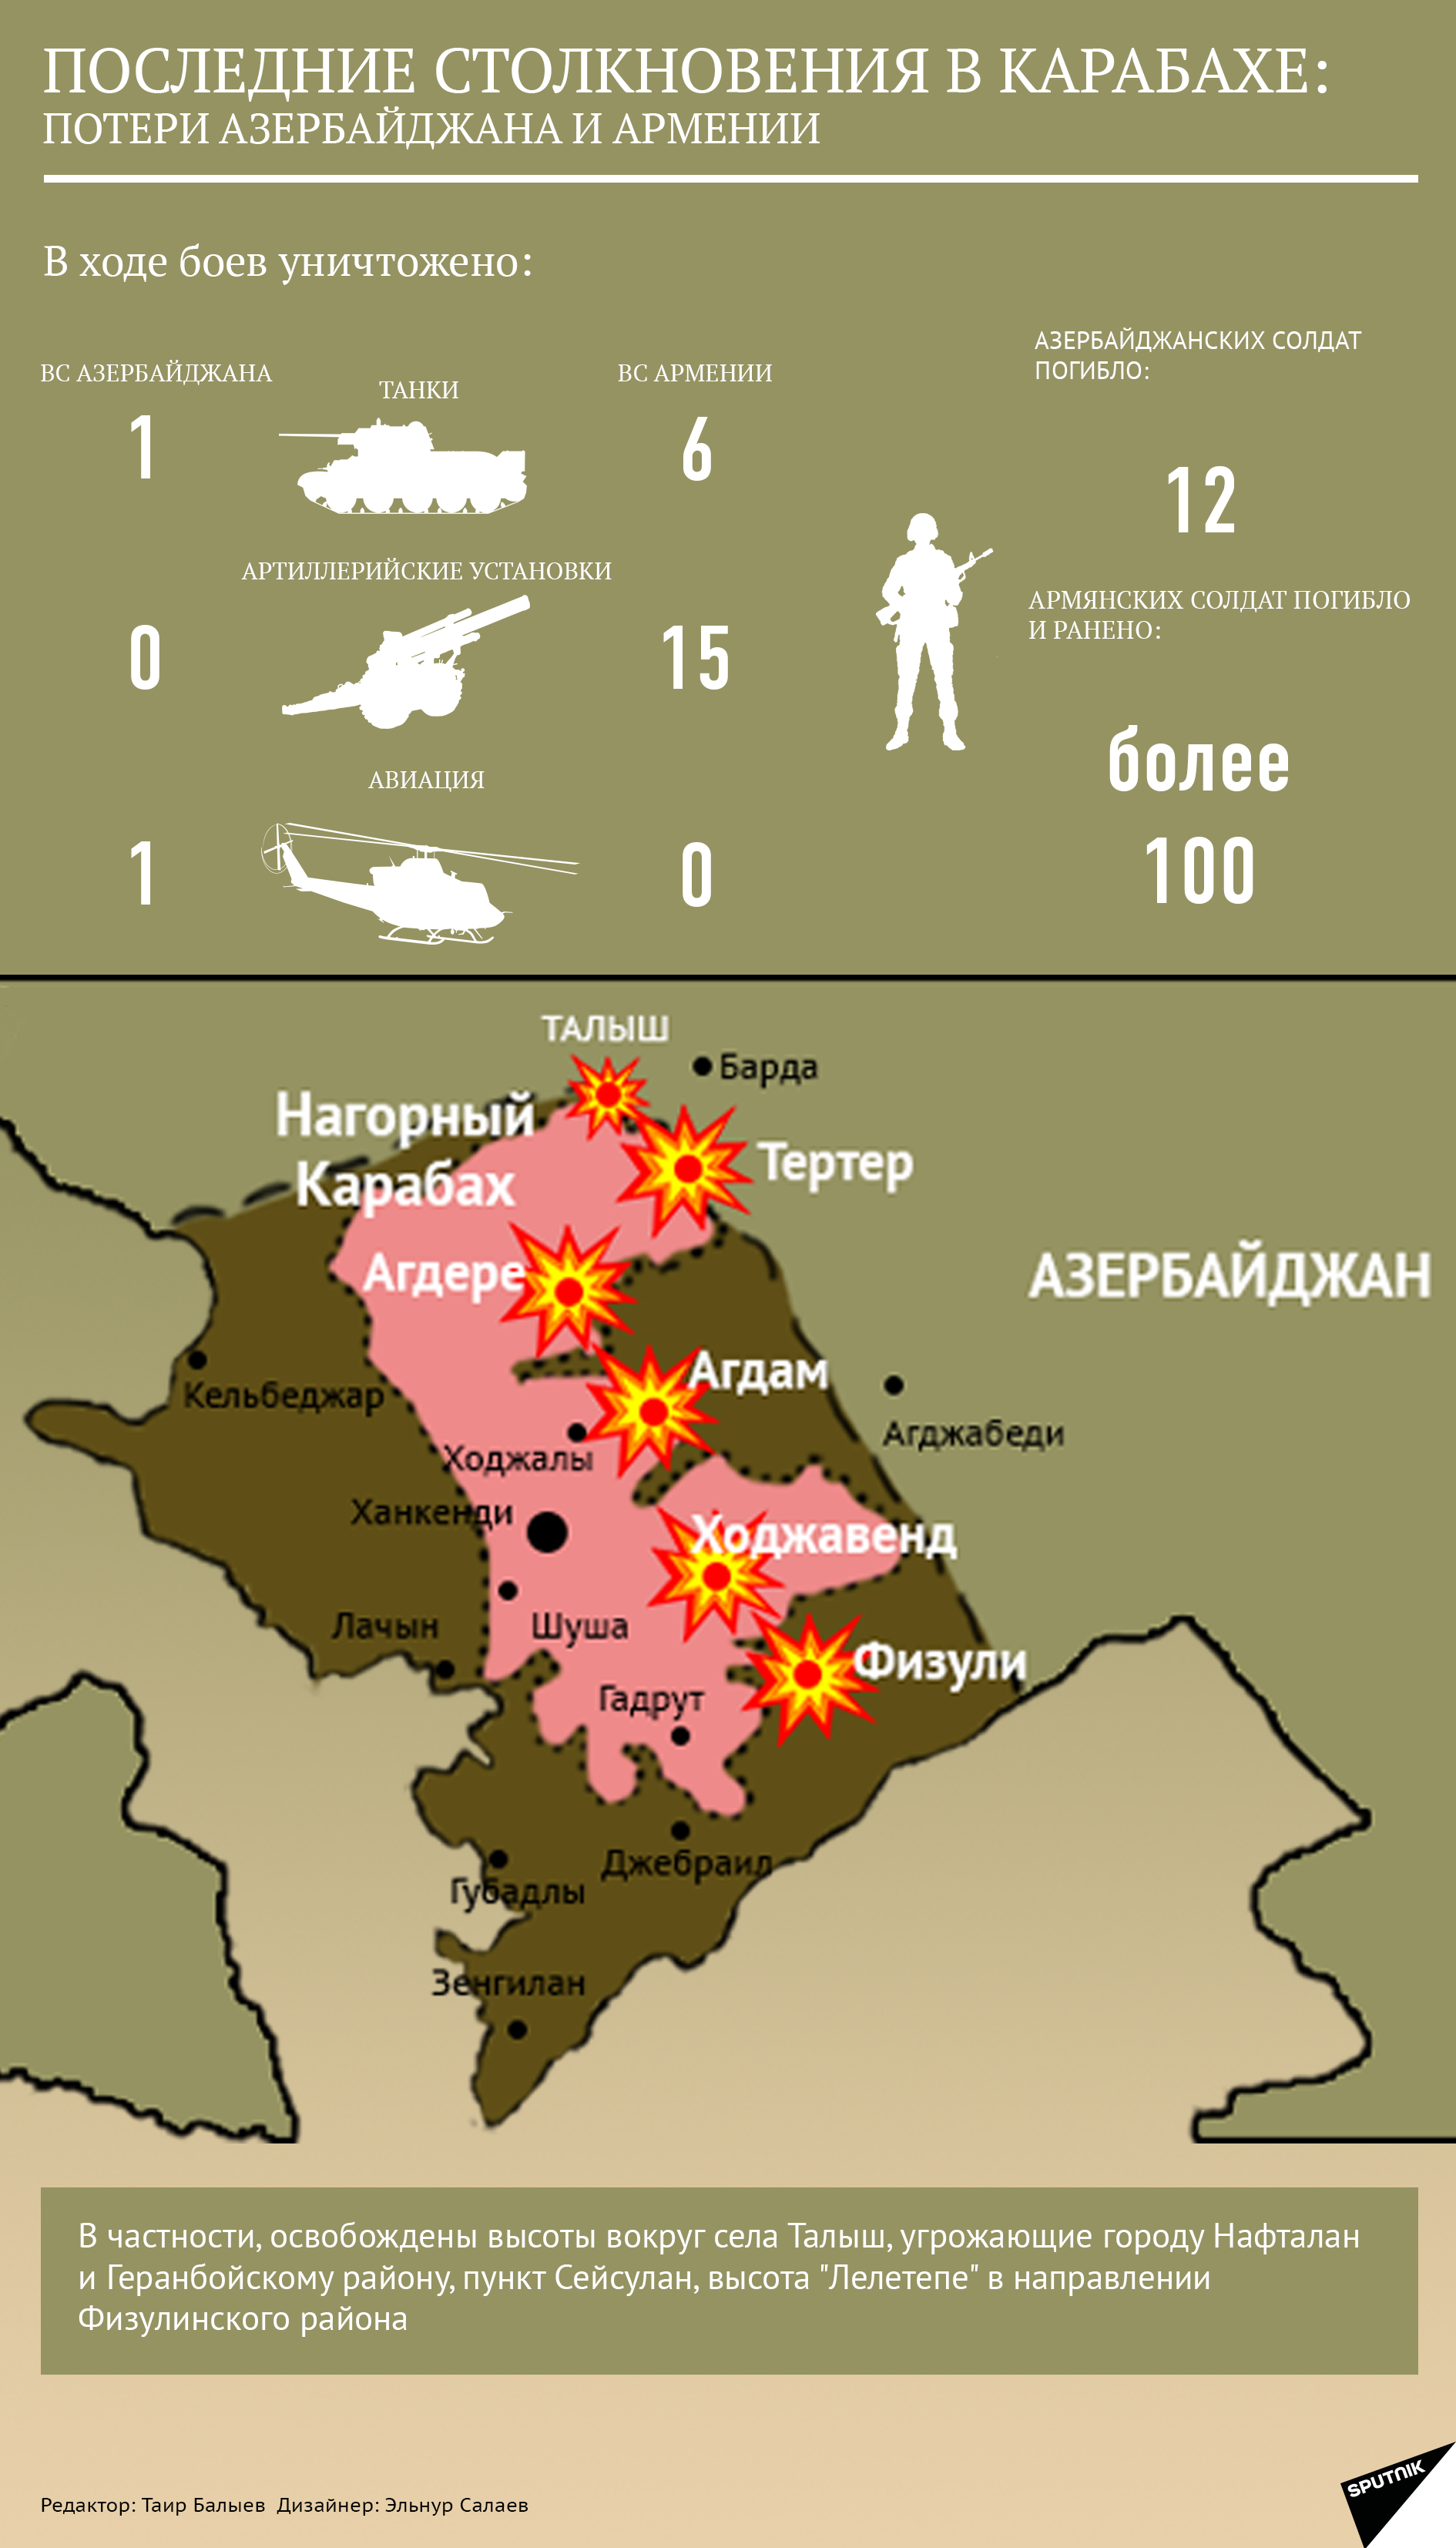 Последние столкновения в Карабахе - потери - Sputnik Азербайджан